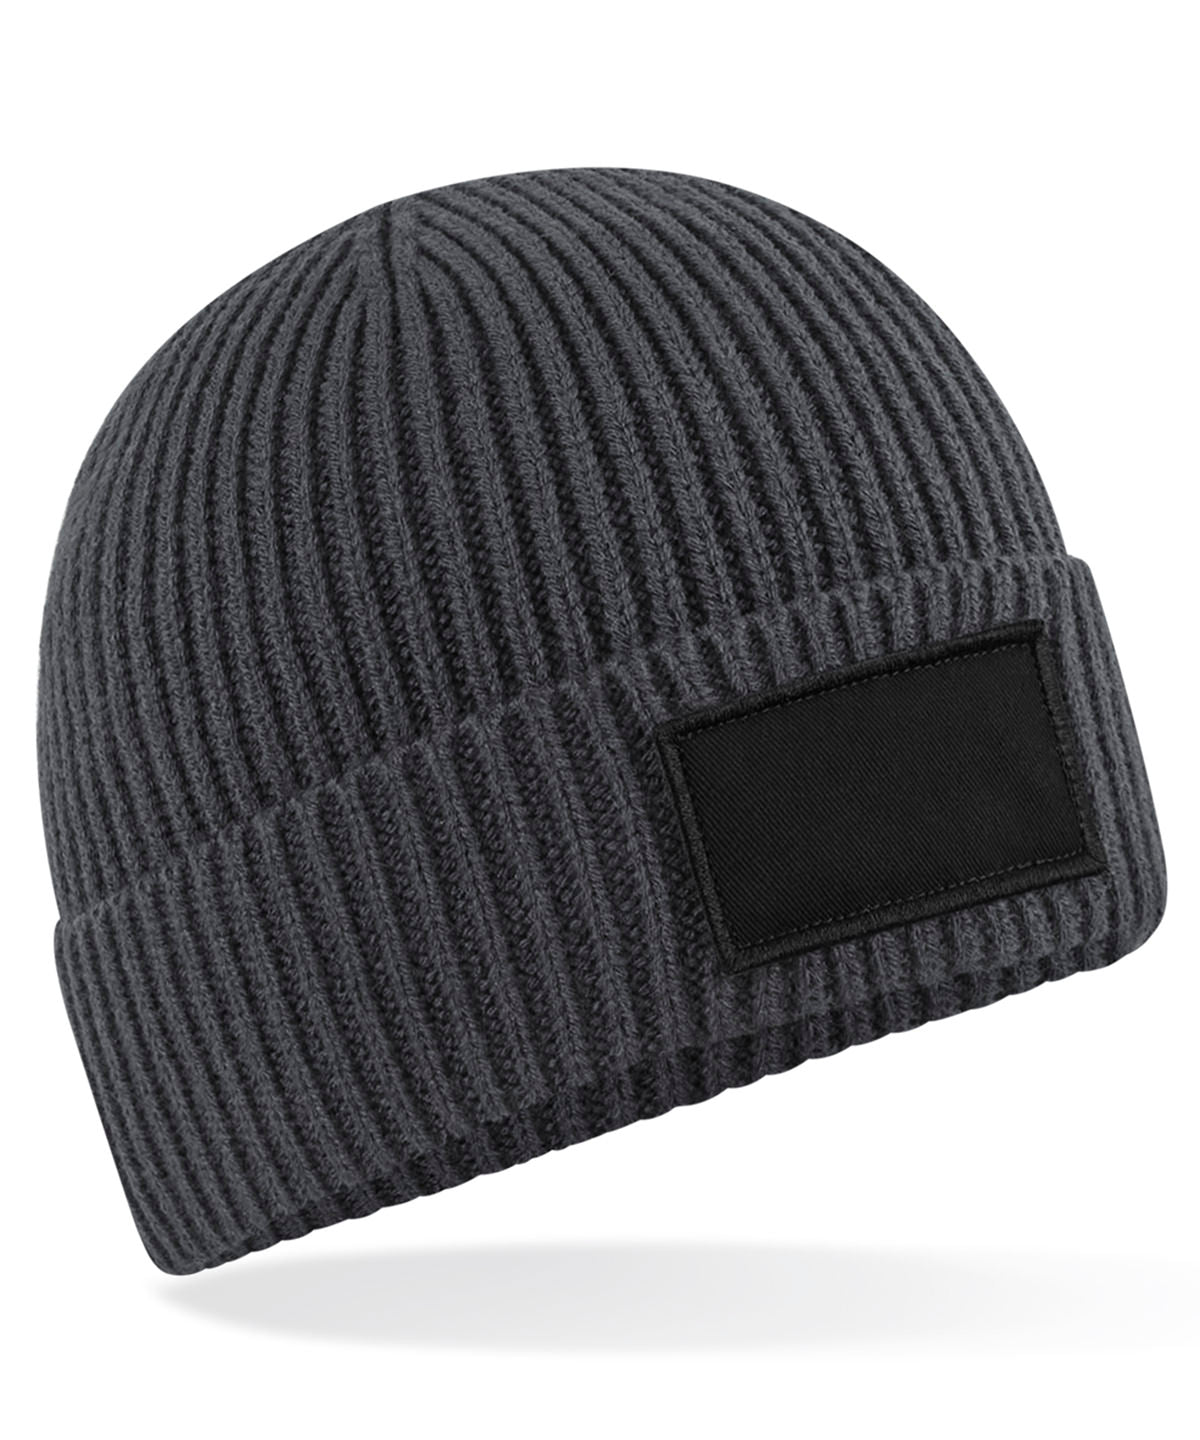 Personalised Hats - Light Grey Beechfield Fashion patch beanie